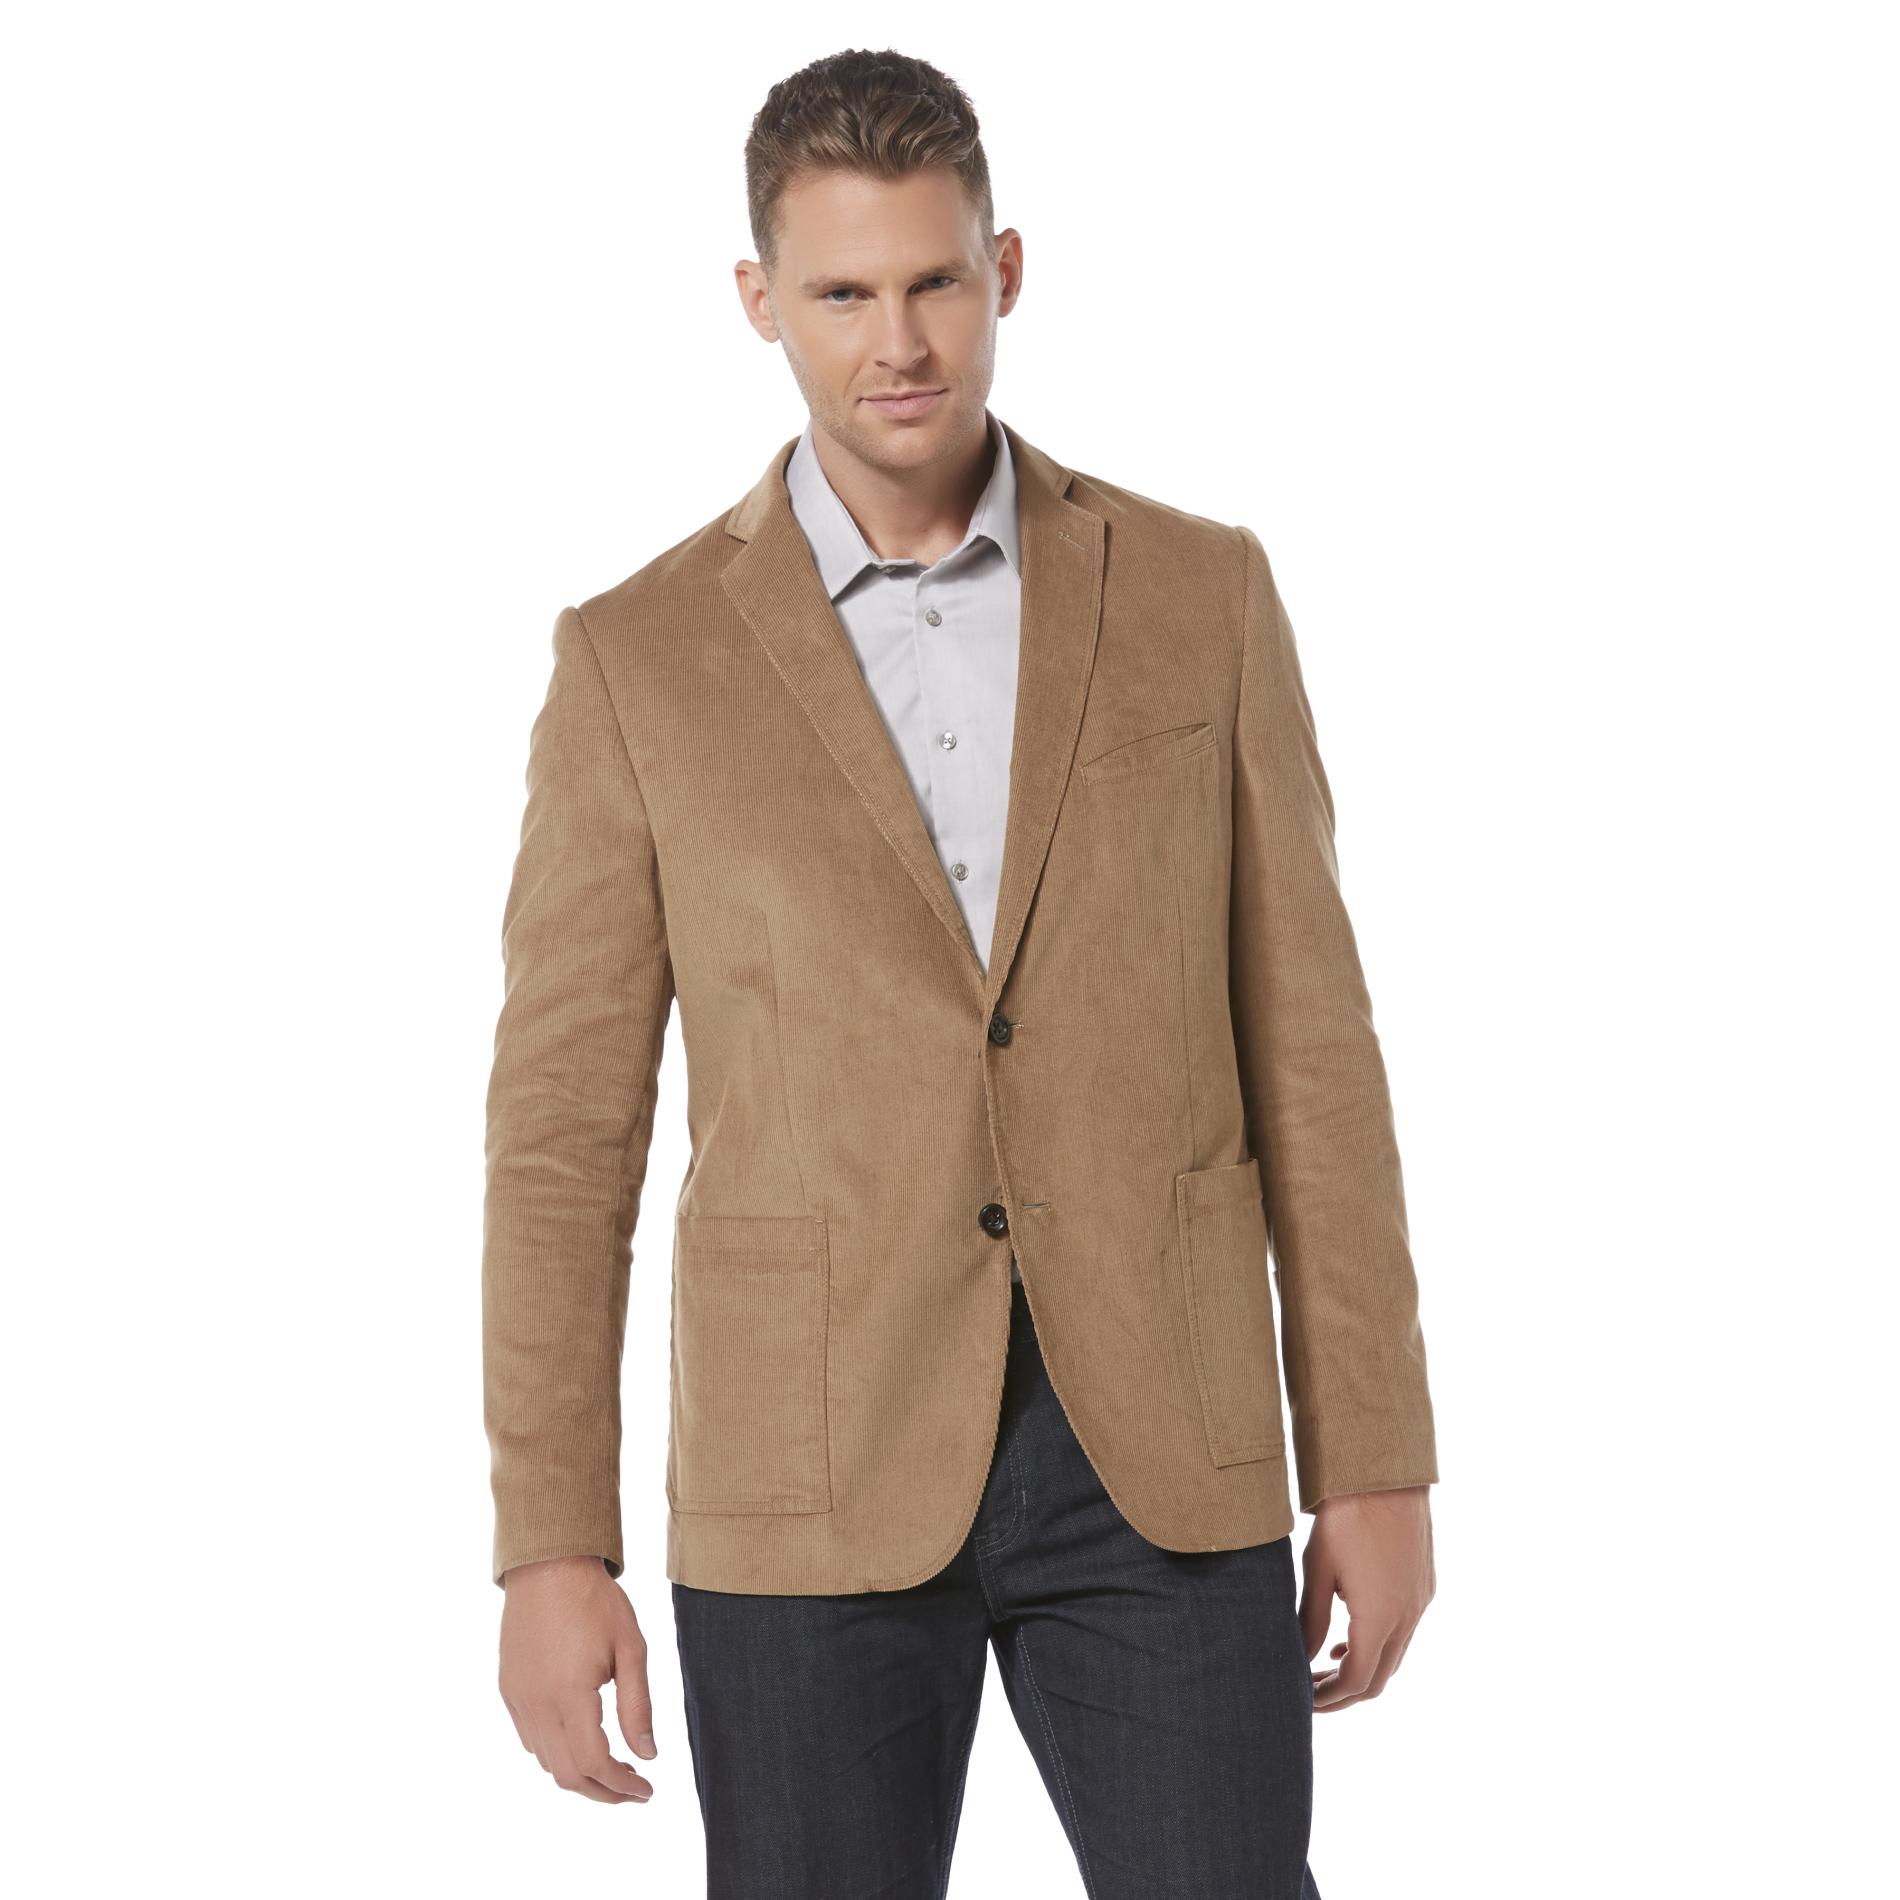 Men's Suits & Sport Coats - Sears